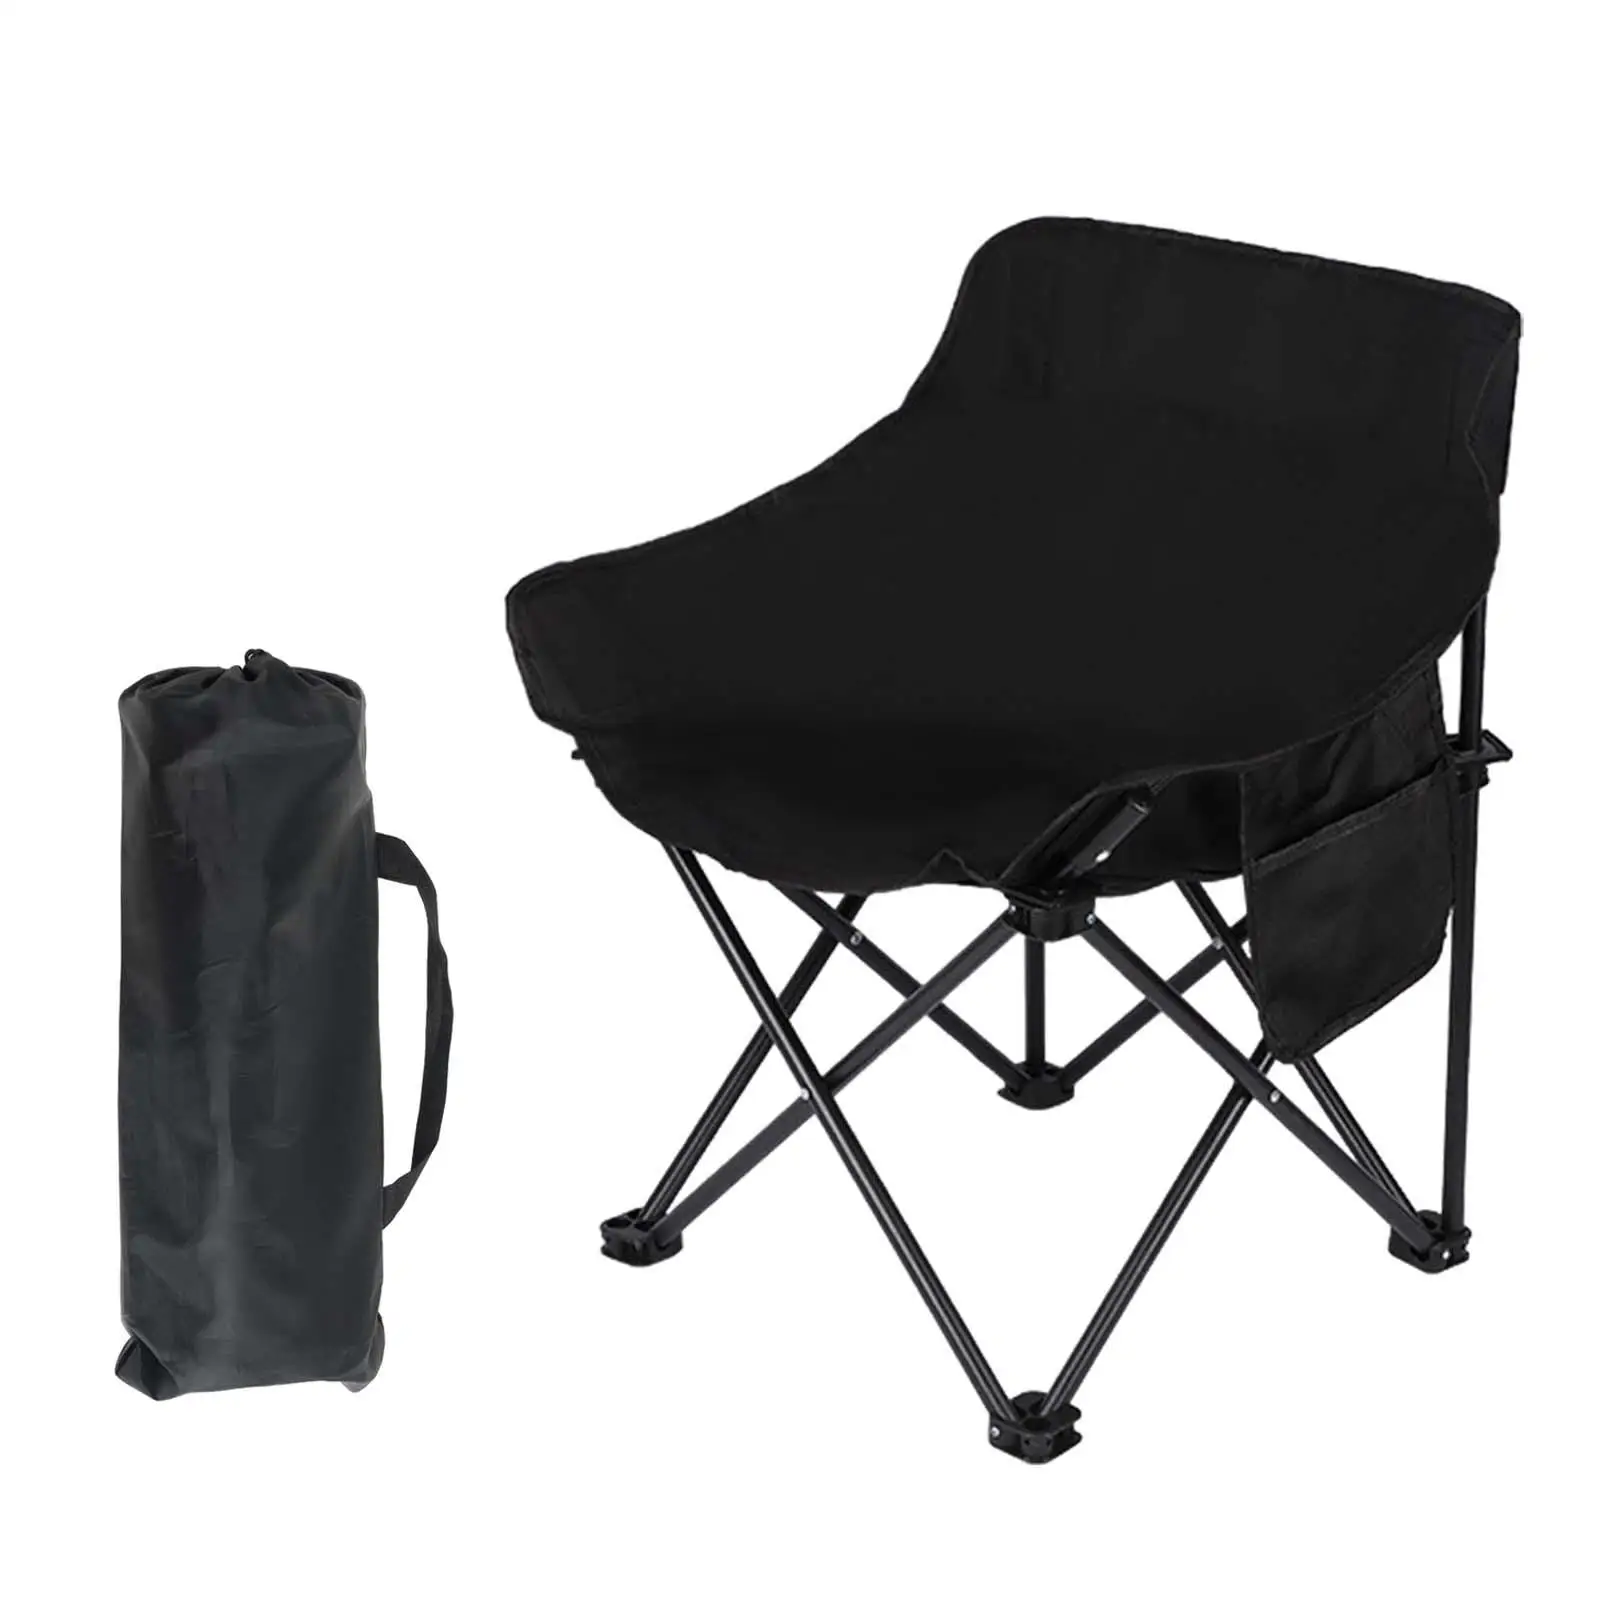 Folding Camping Chair Durable Portable Folding Chair for Hiking Picnics Yard